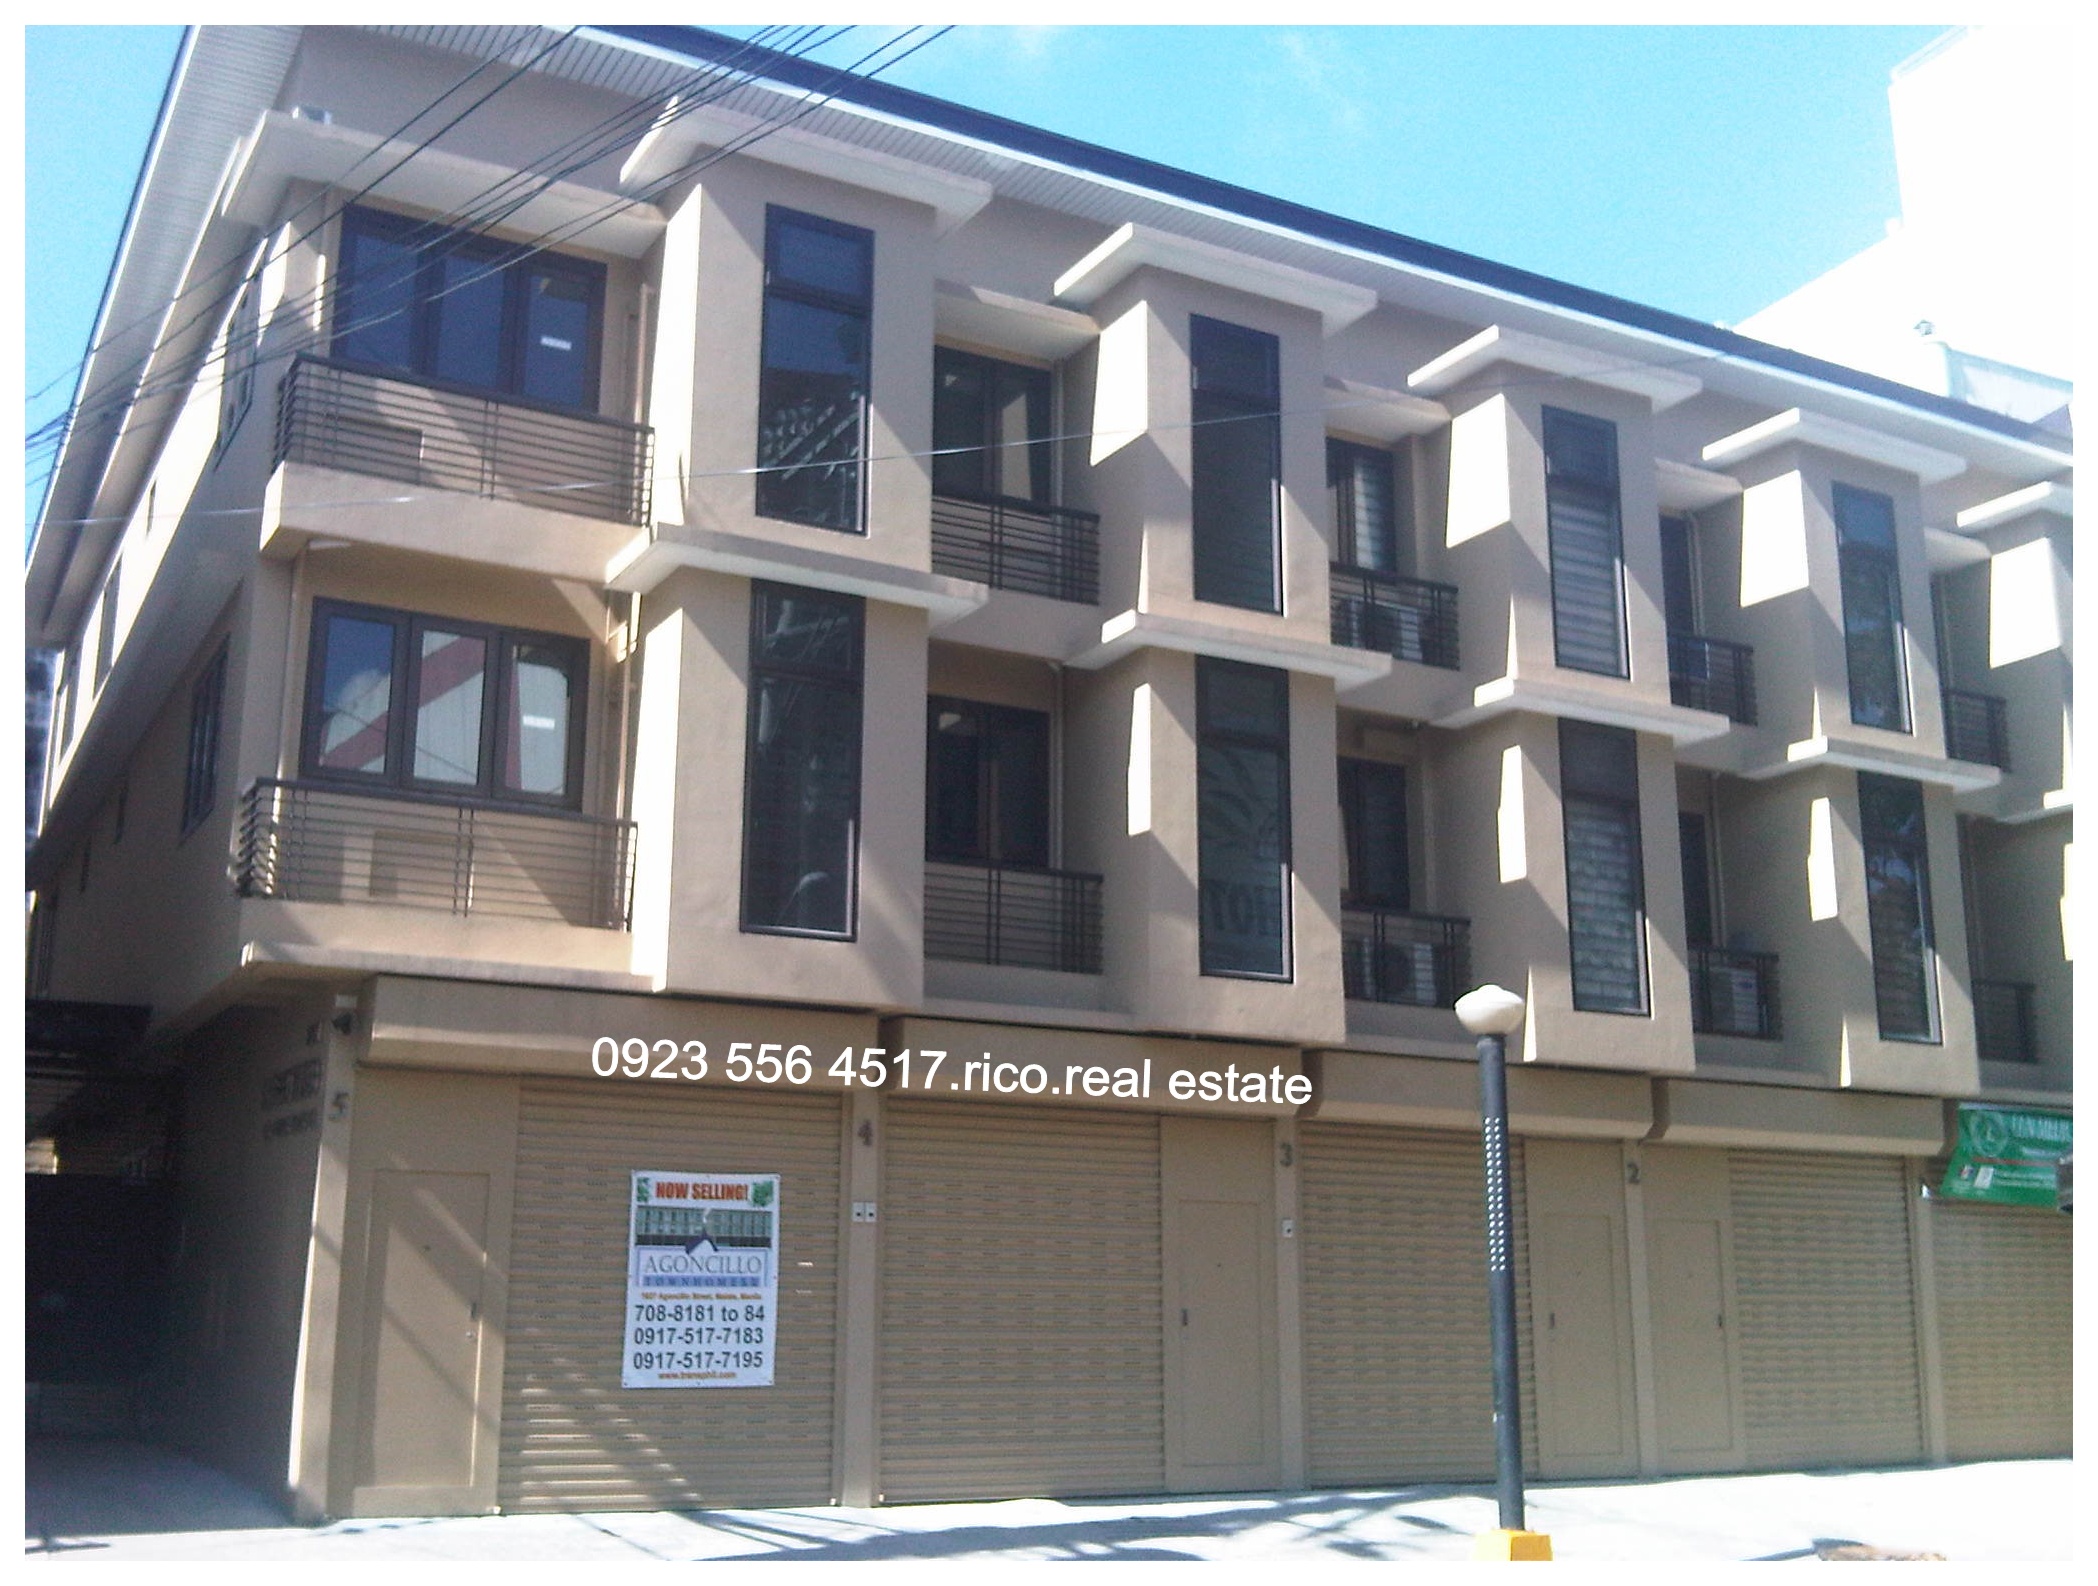 Agoncillo 2 House annd Lot for sale near UP Manila,Robinsons rico 0923 556 4517